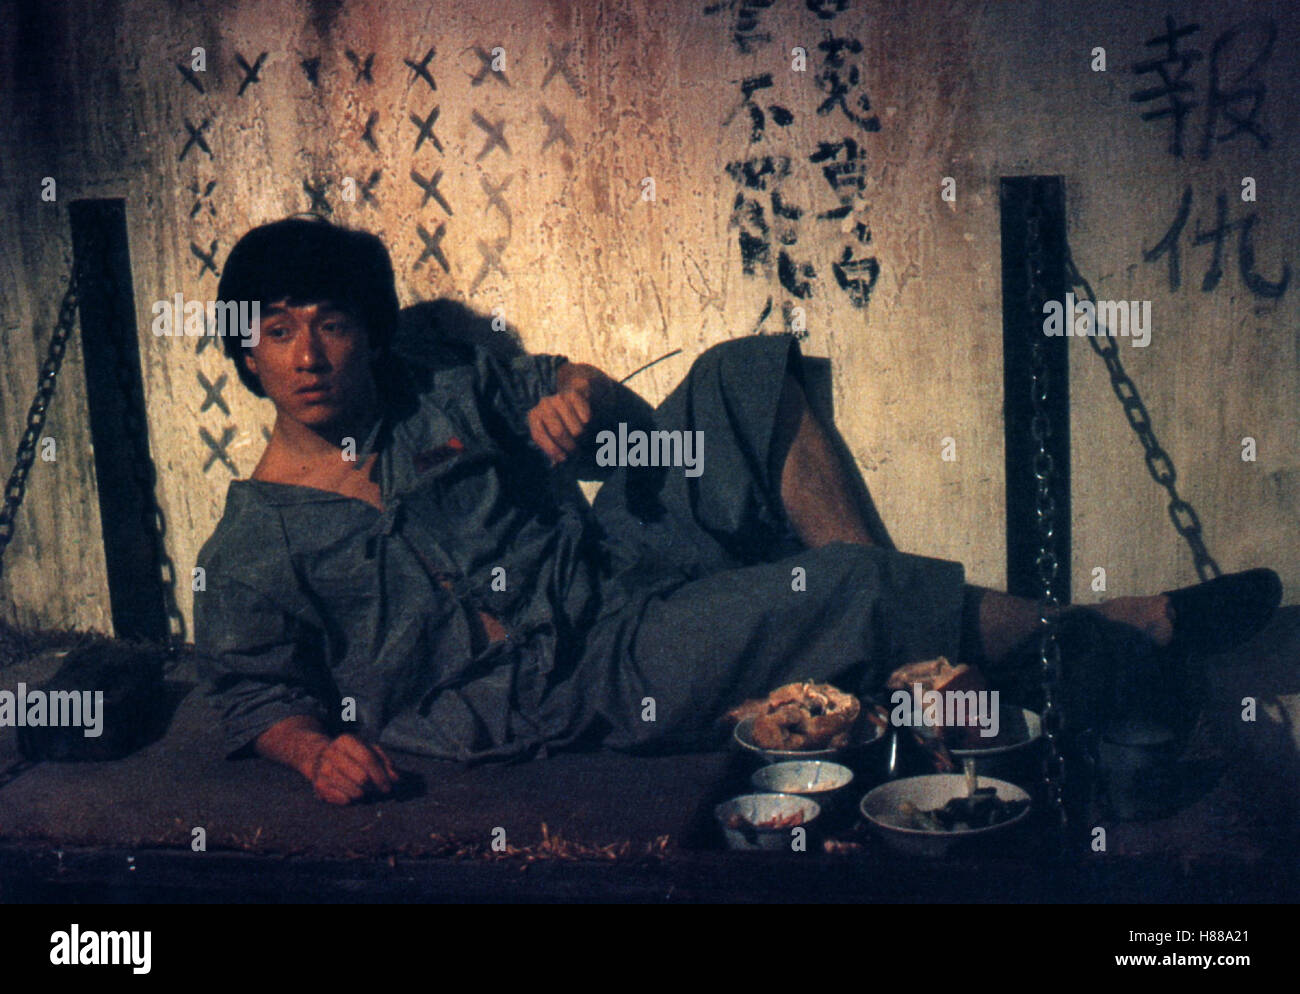 Projekt B, (A CHI-HUA II) HK 1987, Regie : Jackie Chan, JACKIE CHAN, Ausdruck : Pritsche, Gefängnis, Zelle, détenu Banque D'Images